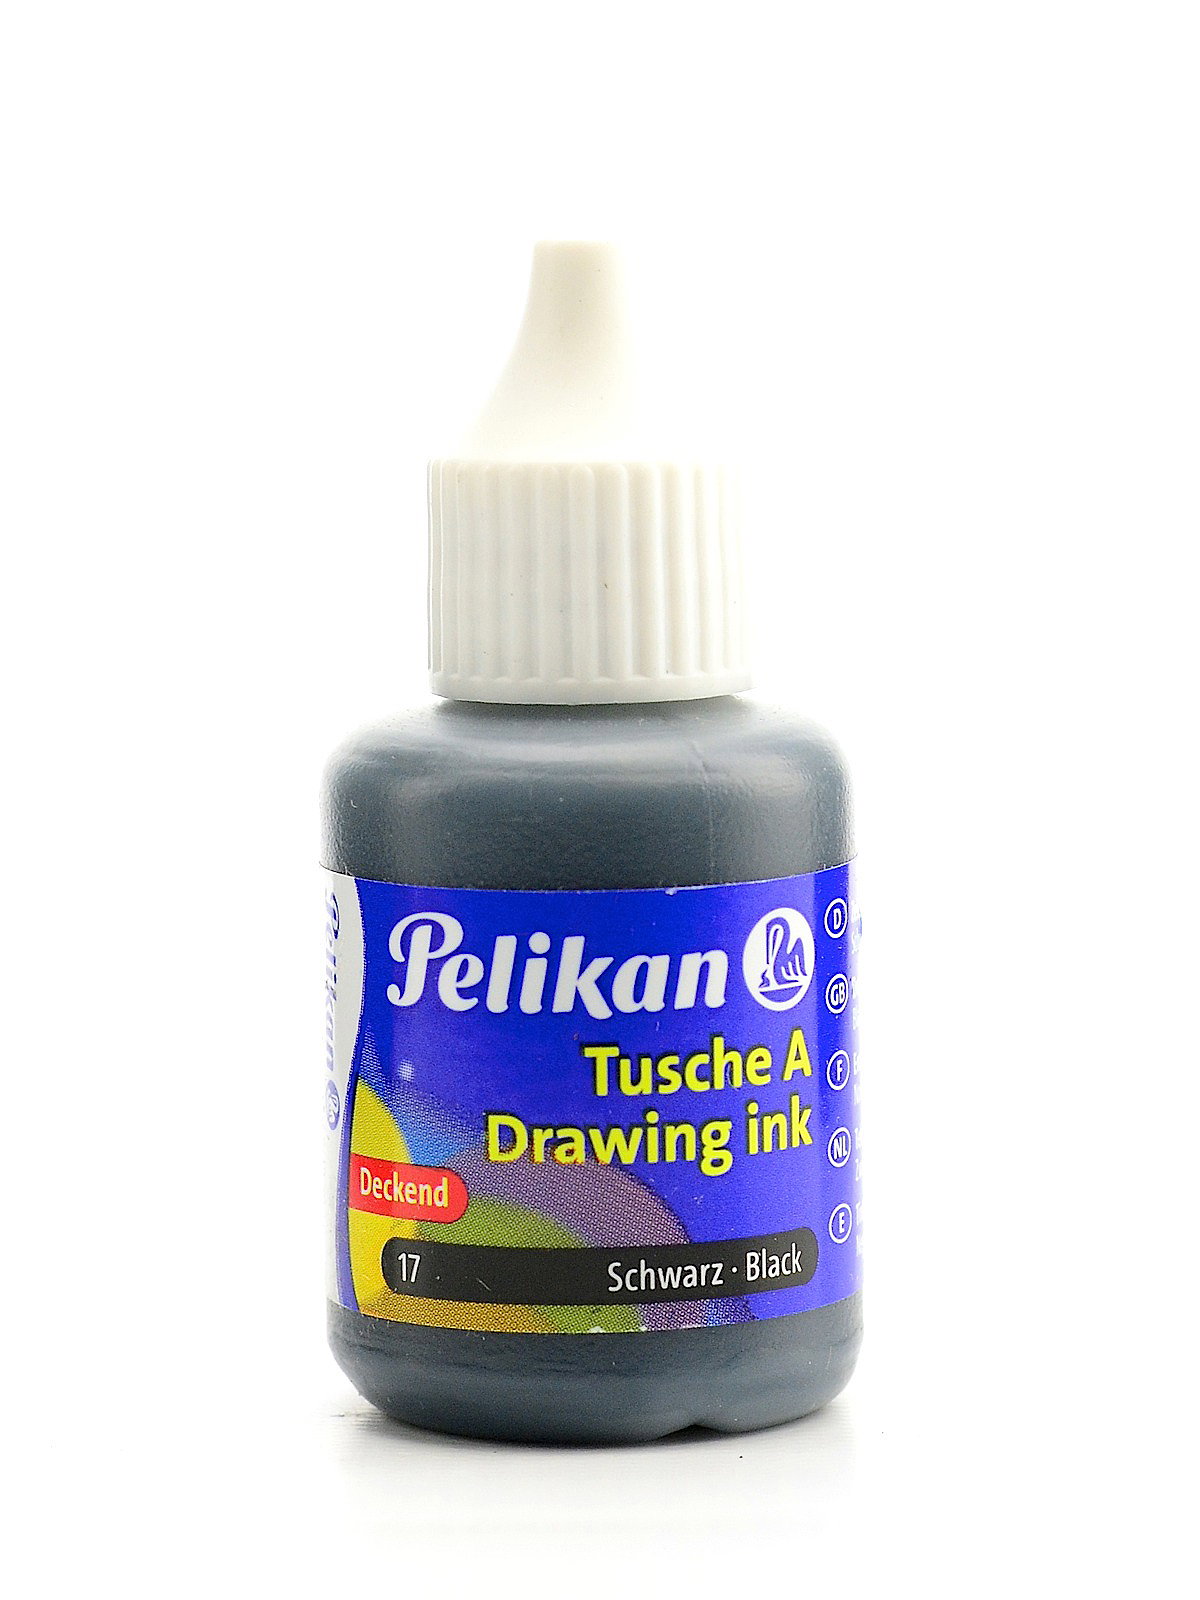 ontbijt Arbitrage Stereotype Pelikan Drawing Ink | MisterArt.com